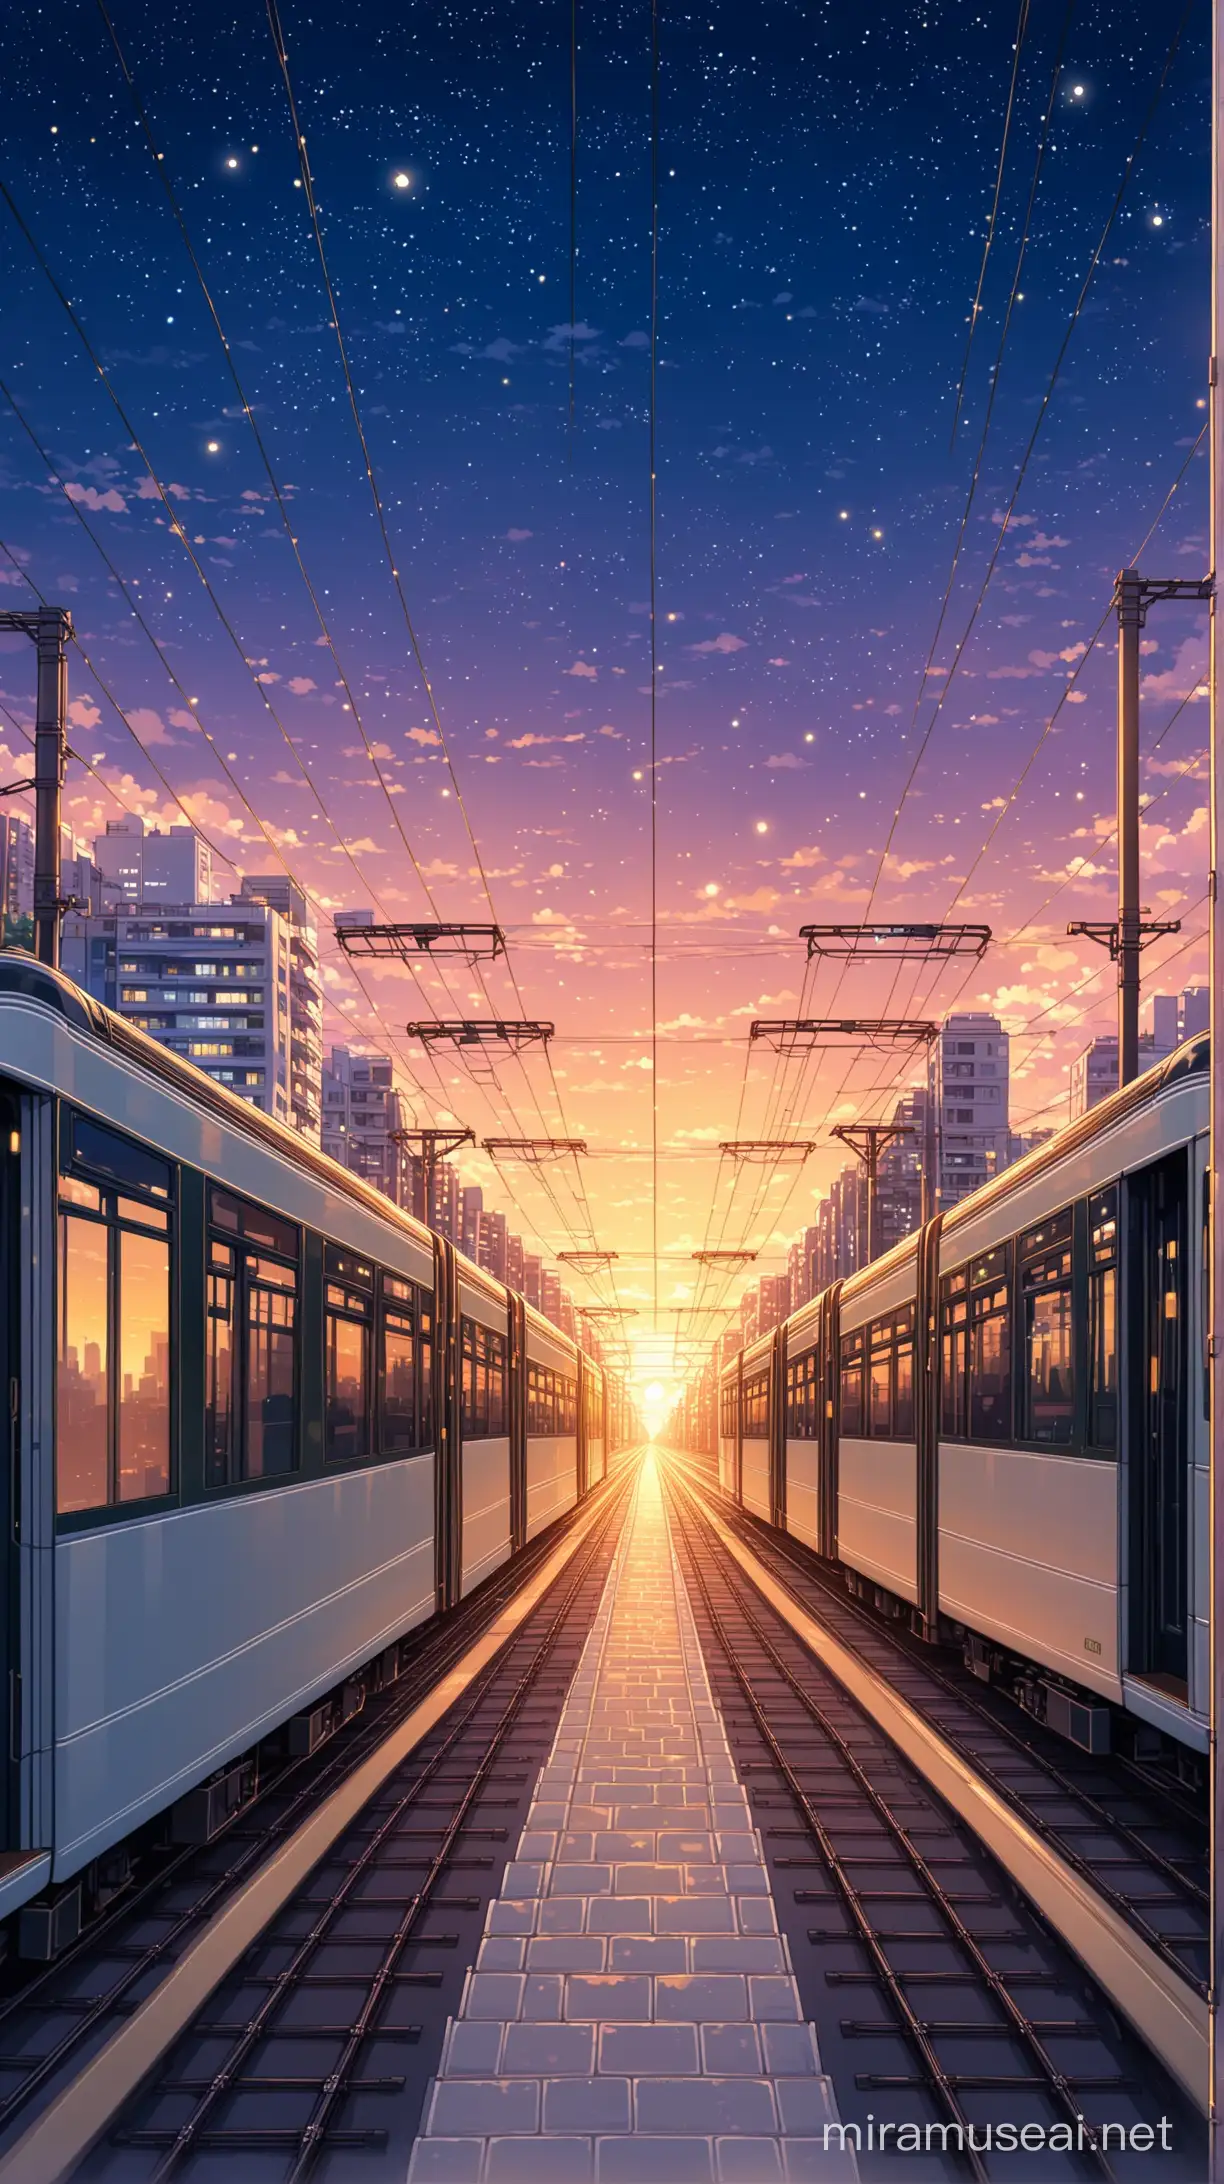 Tram Rail Behind City in Evening Sky with Stars Cozy Urban Scene